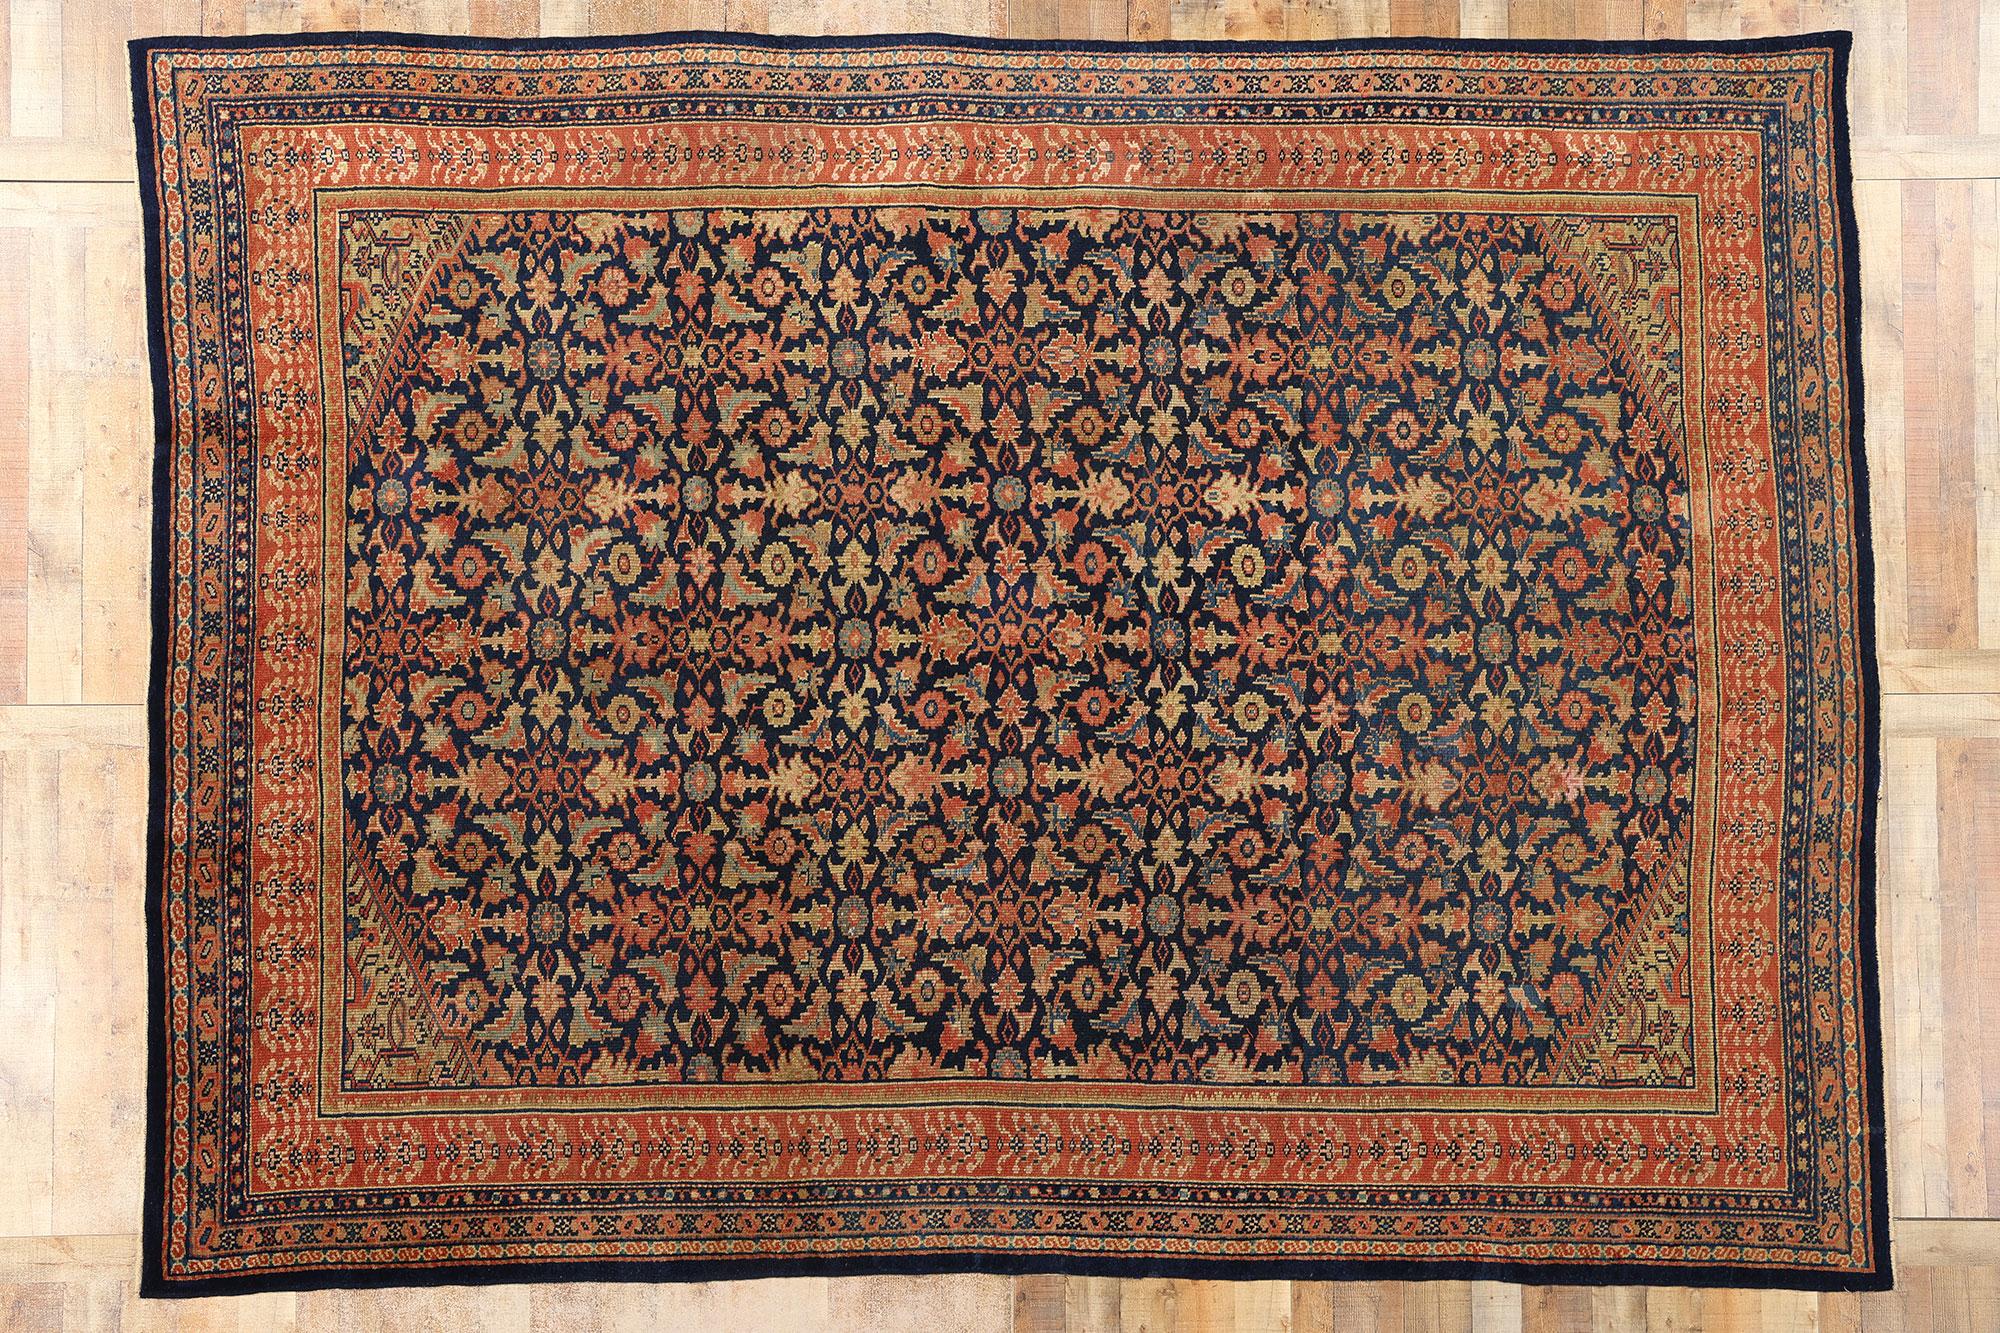 Late 19th Century Distressed Antique Navy Blue Persian Kurdish Carpet For Sale 3